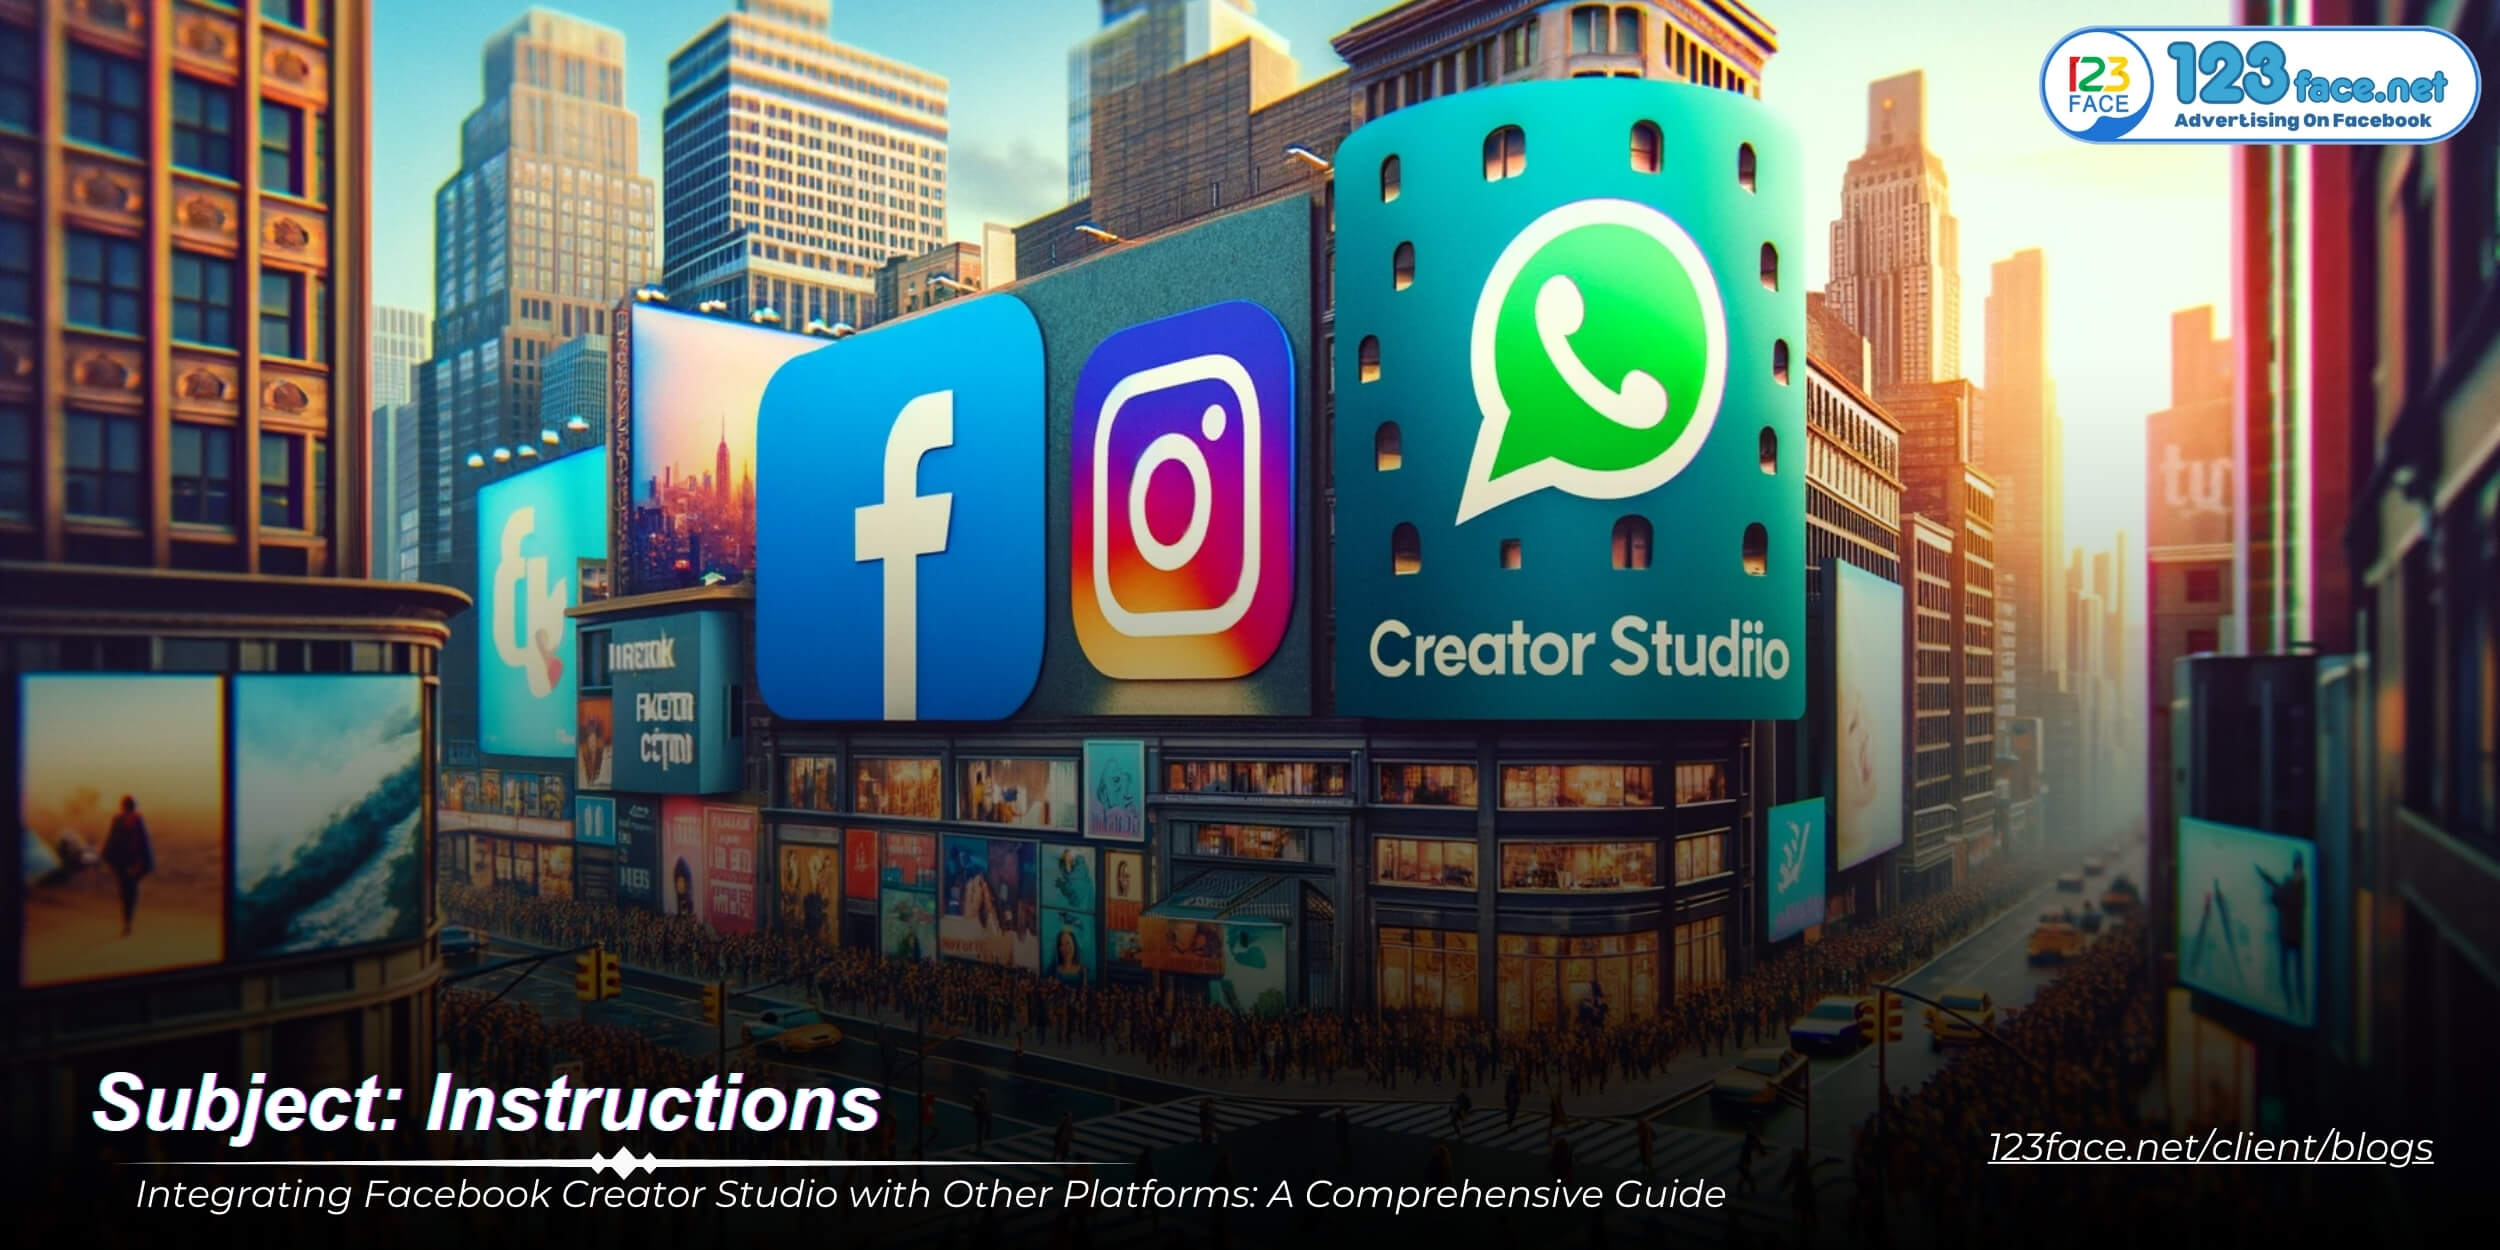 Integrating Facebook Creator Studio with Other Platforms: A Comprehensive Guide